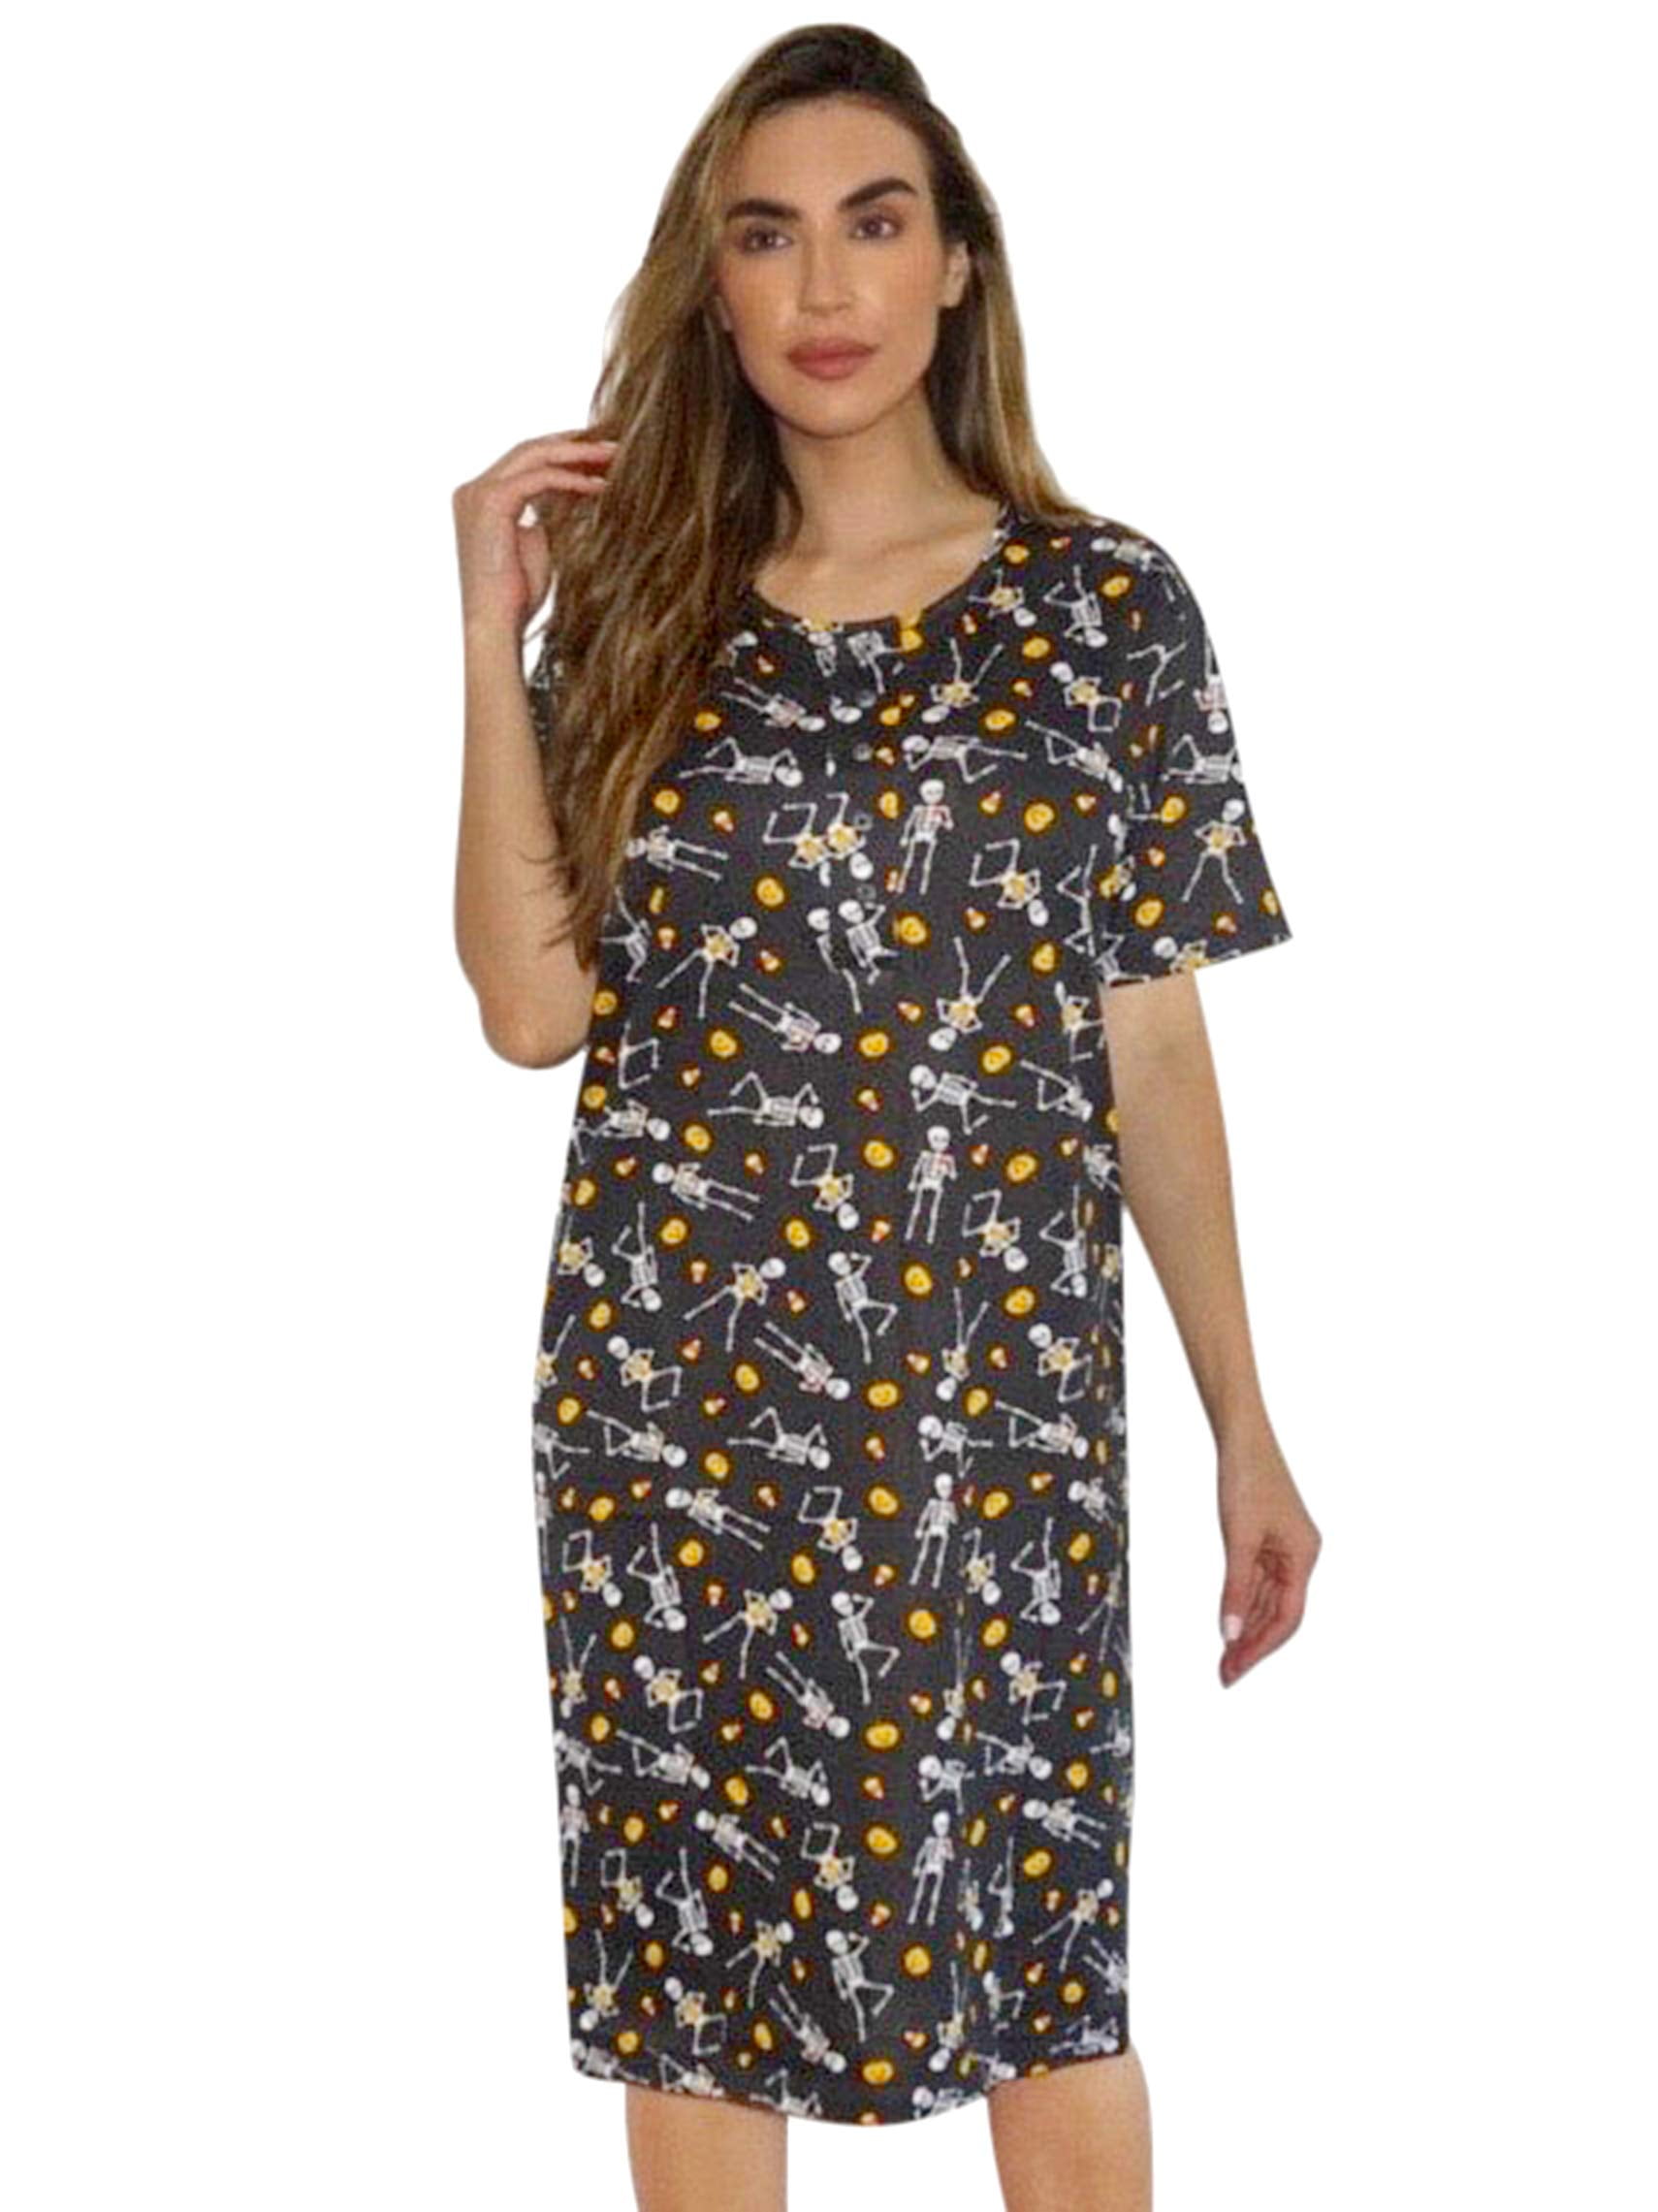 Just Love Short Sleeve Nightgown Sleep Dress For Women 4360 10018 Gry 1x Black Skeleton 